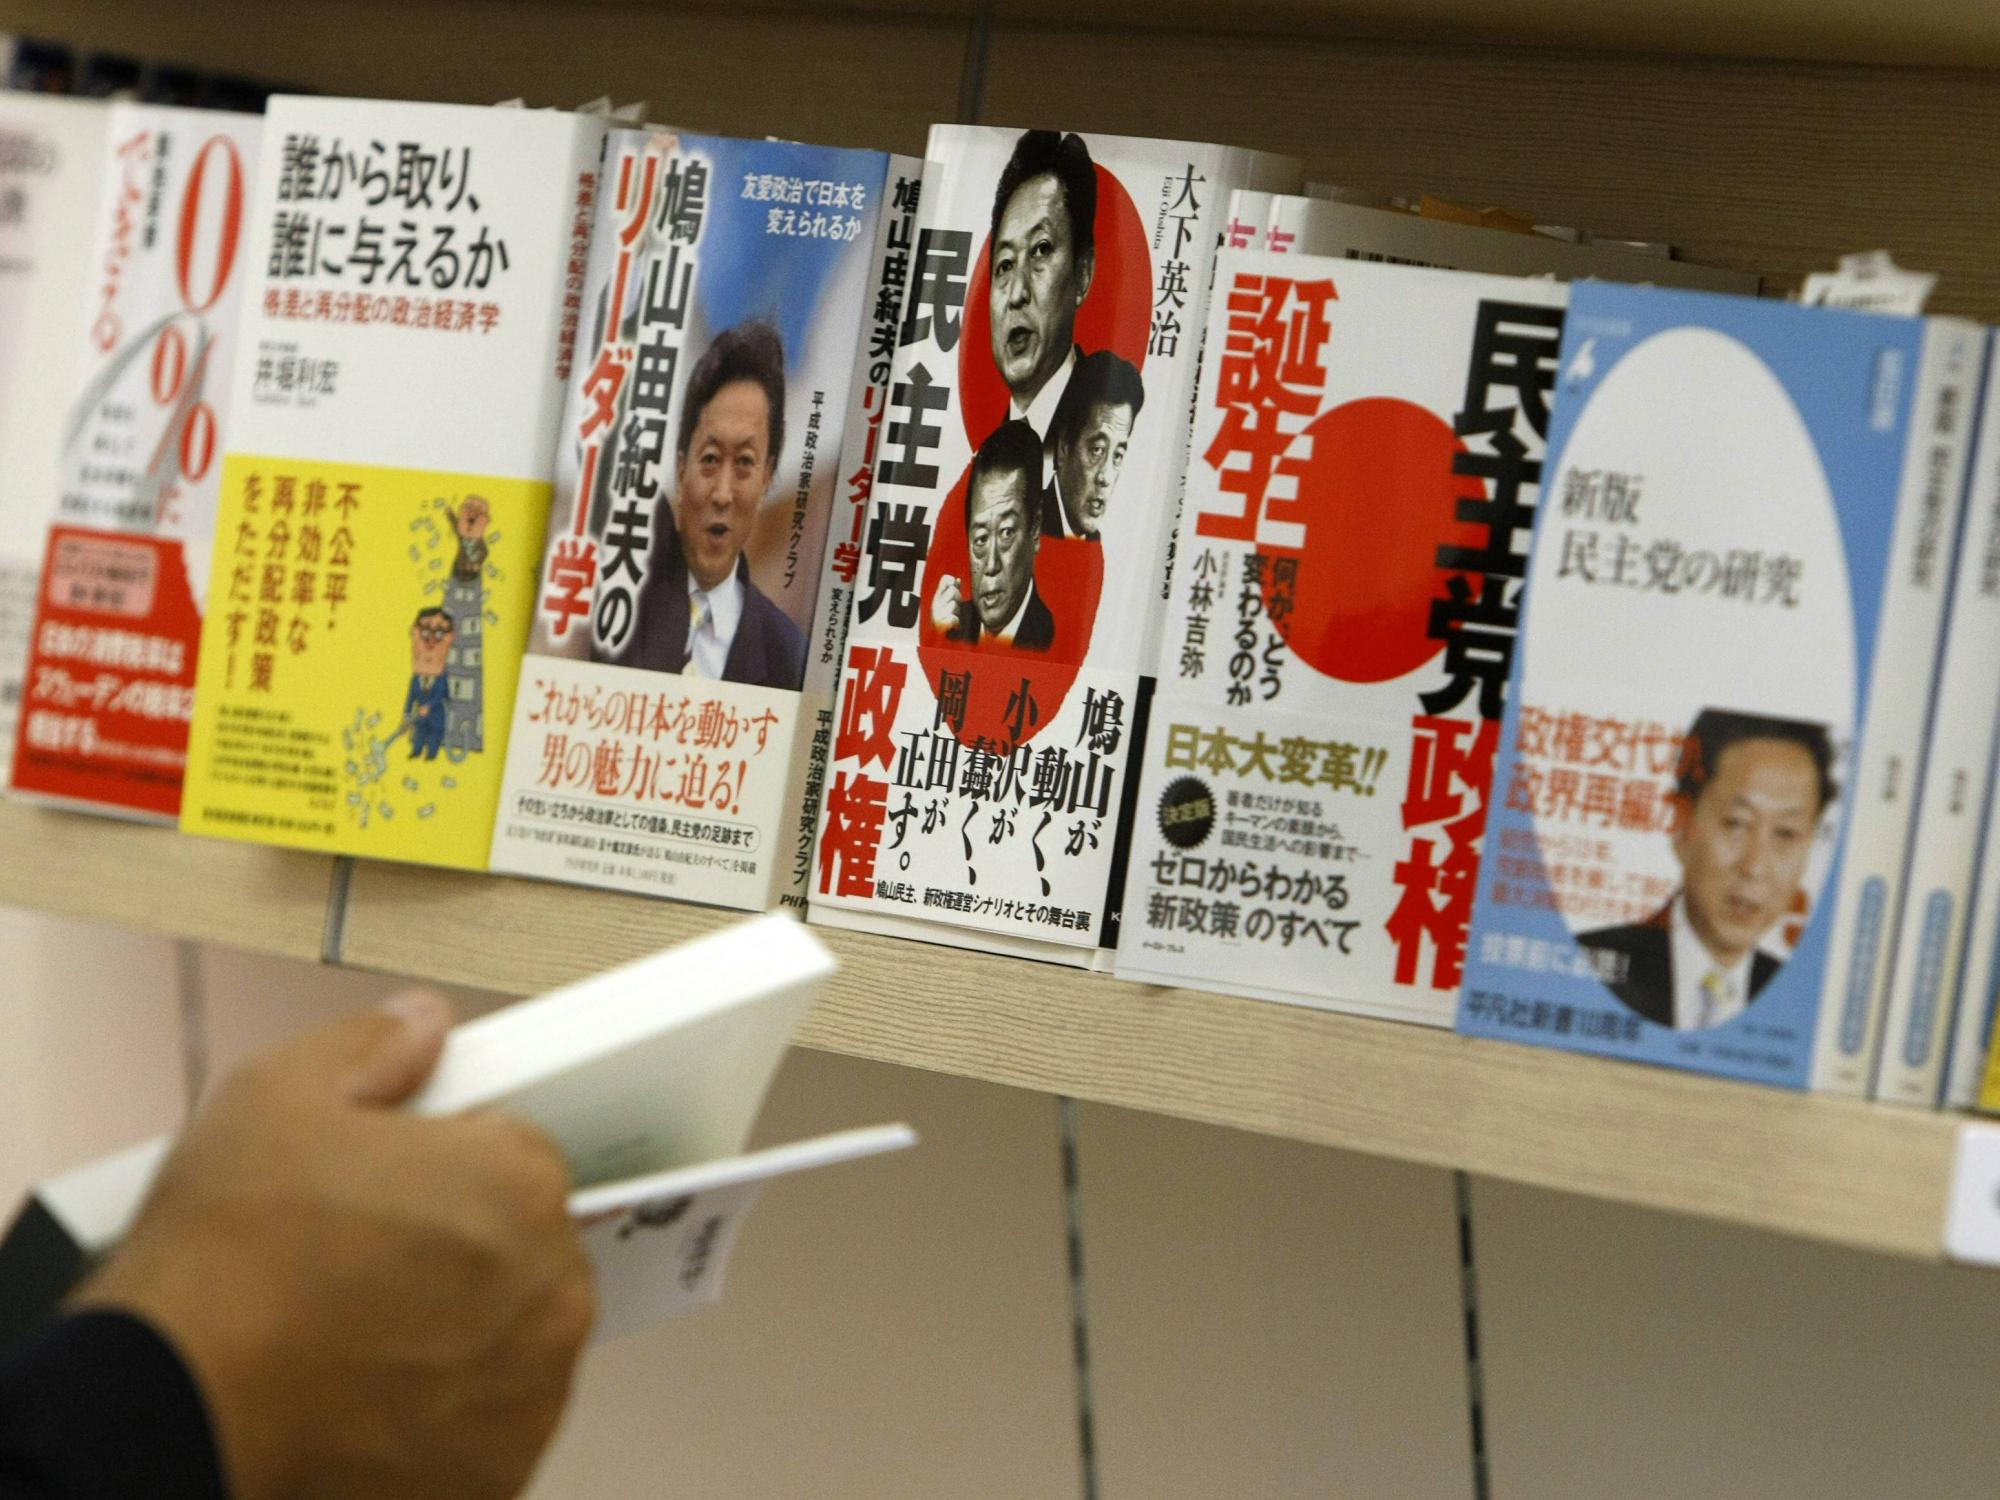 Japan's Democratic Party wins election